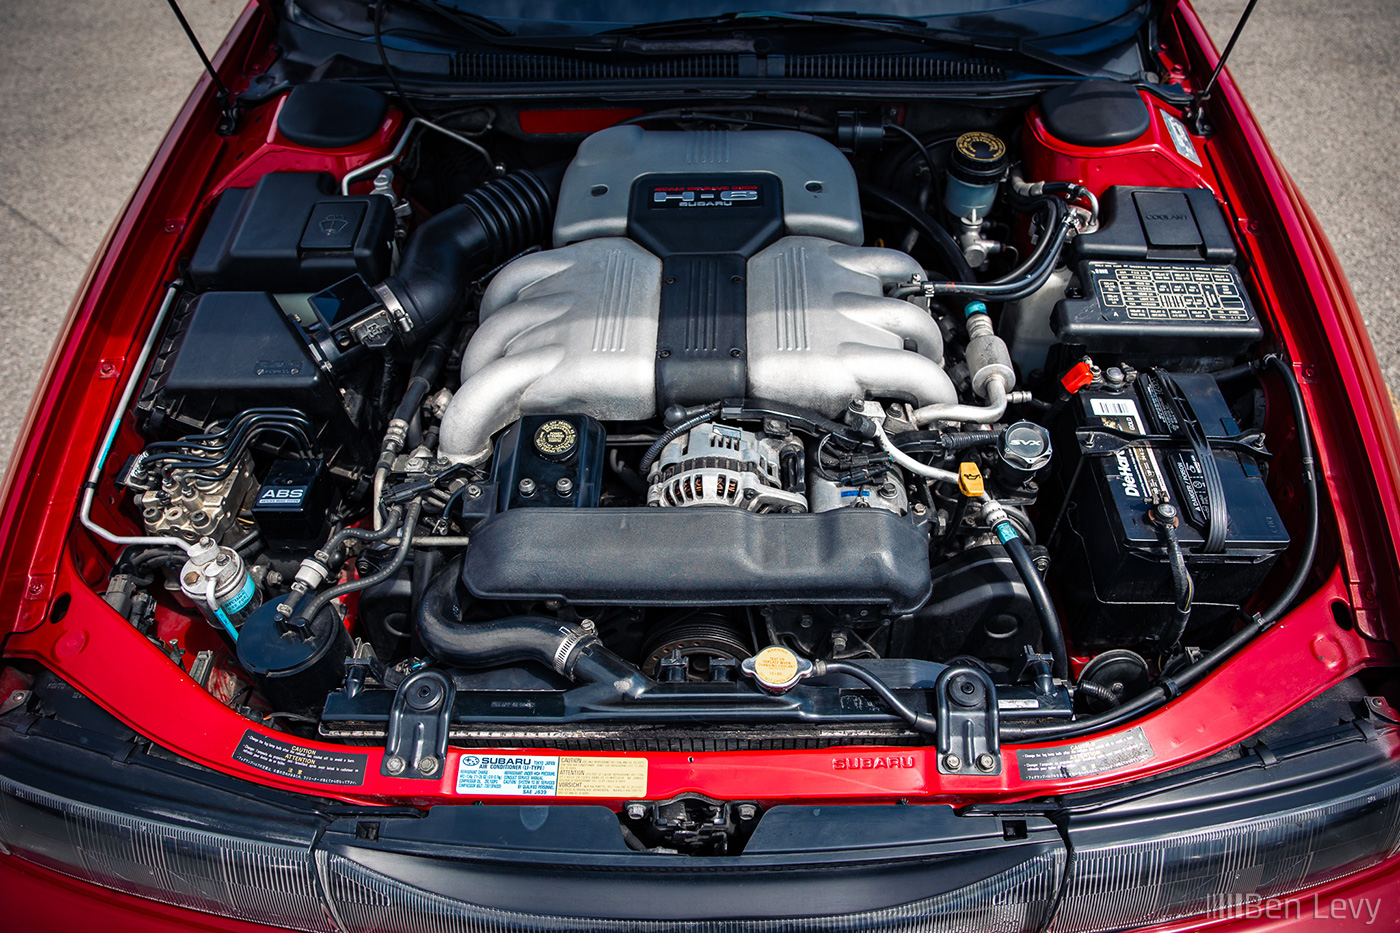 H6 Engine in Subaru SVX